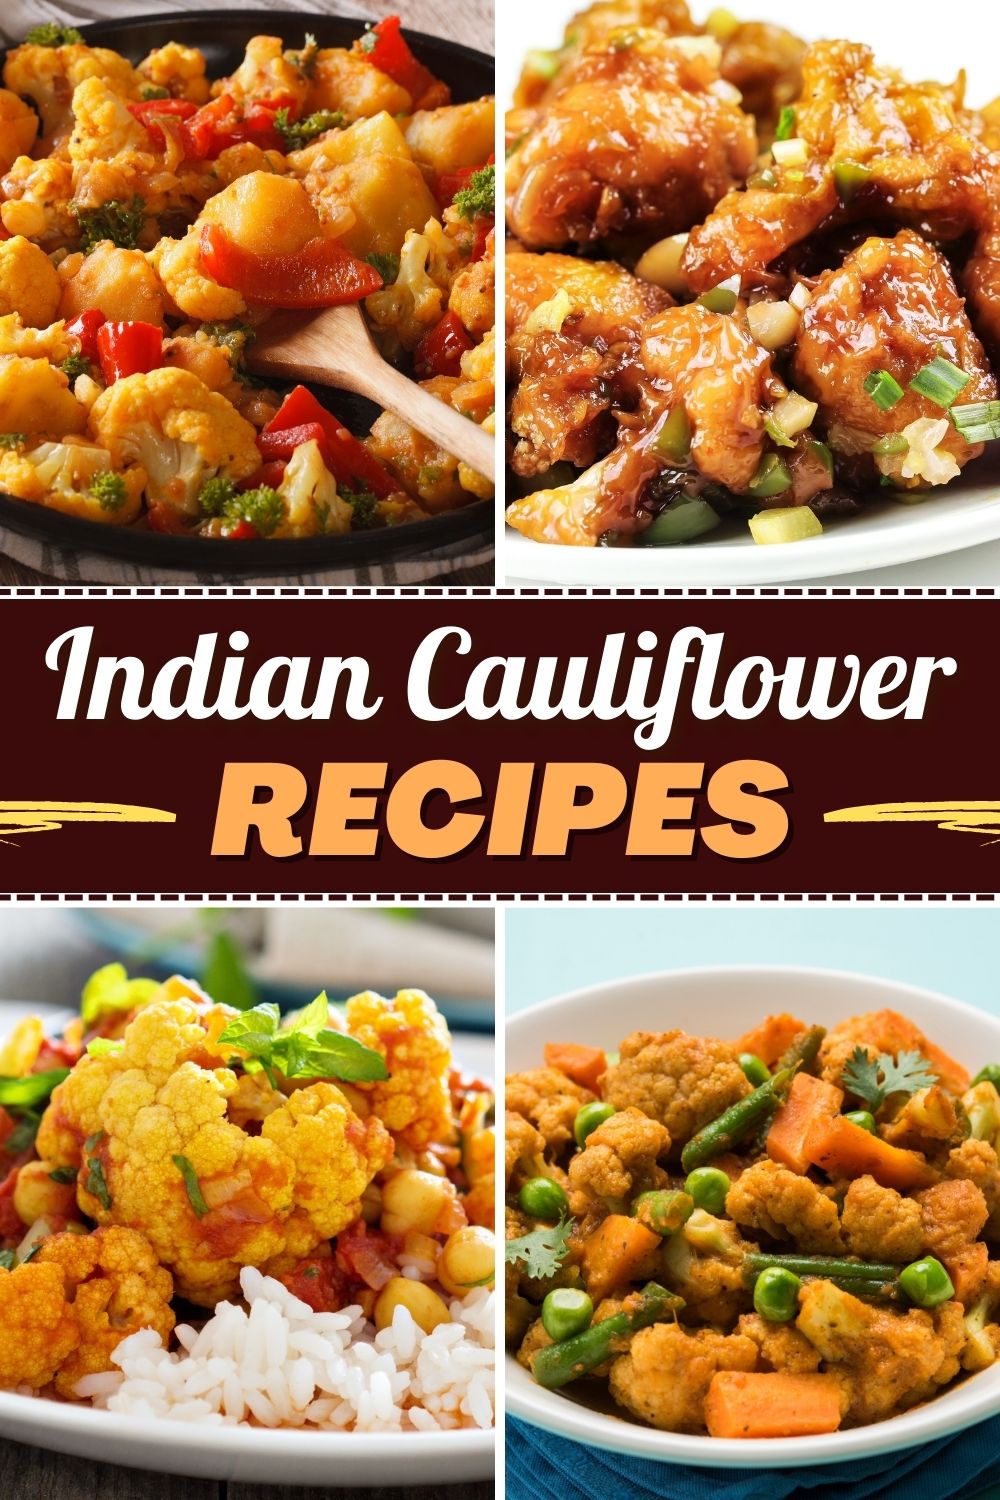 Indian Cauliflower Recipes 1 